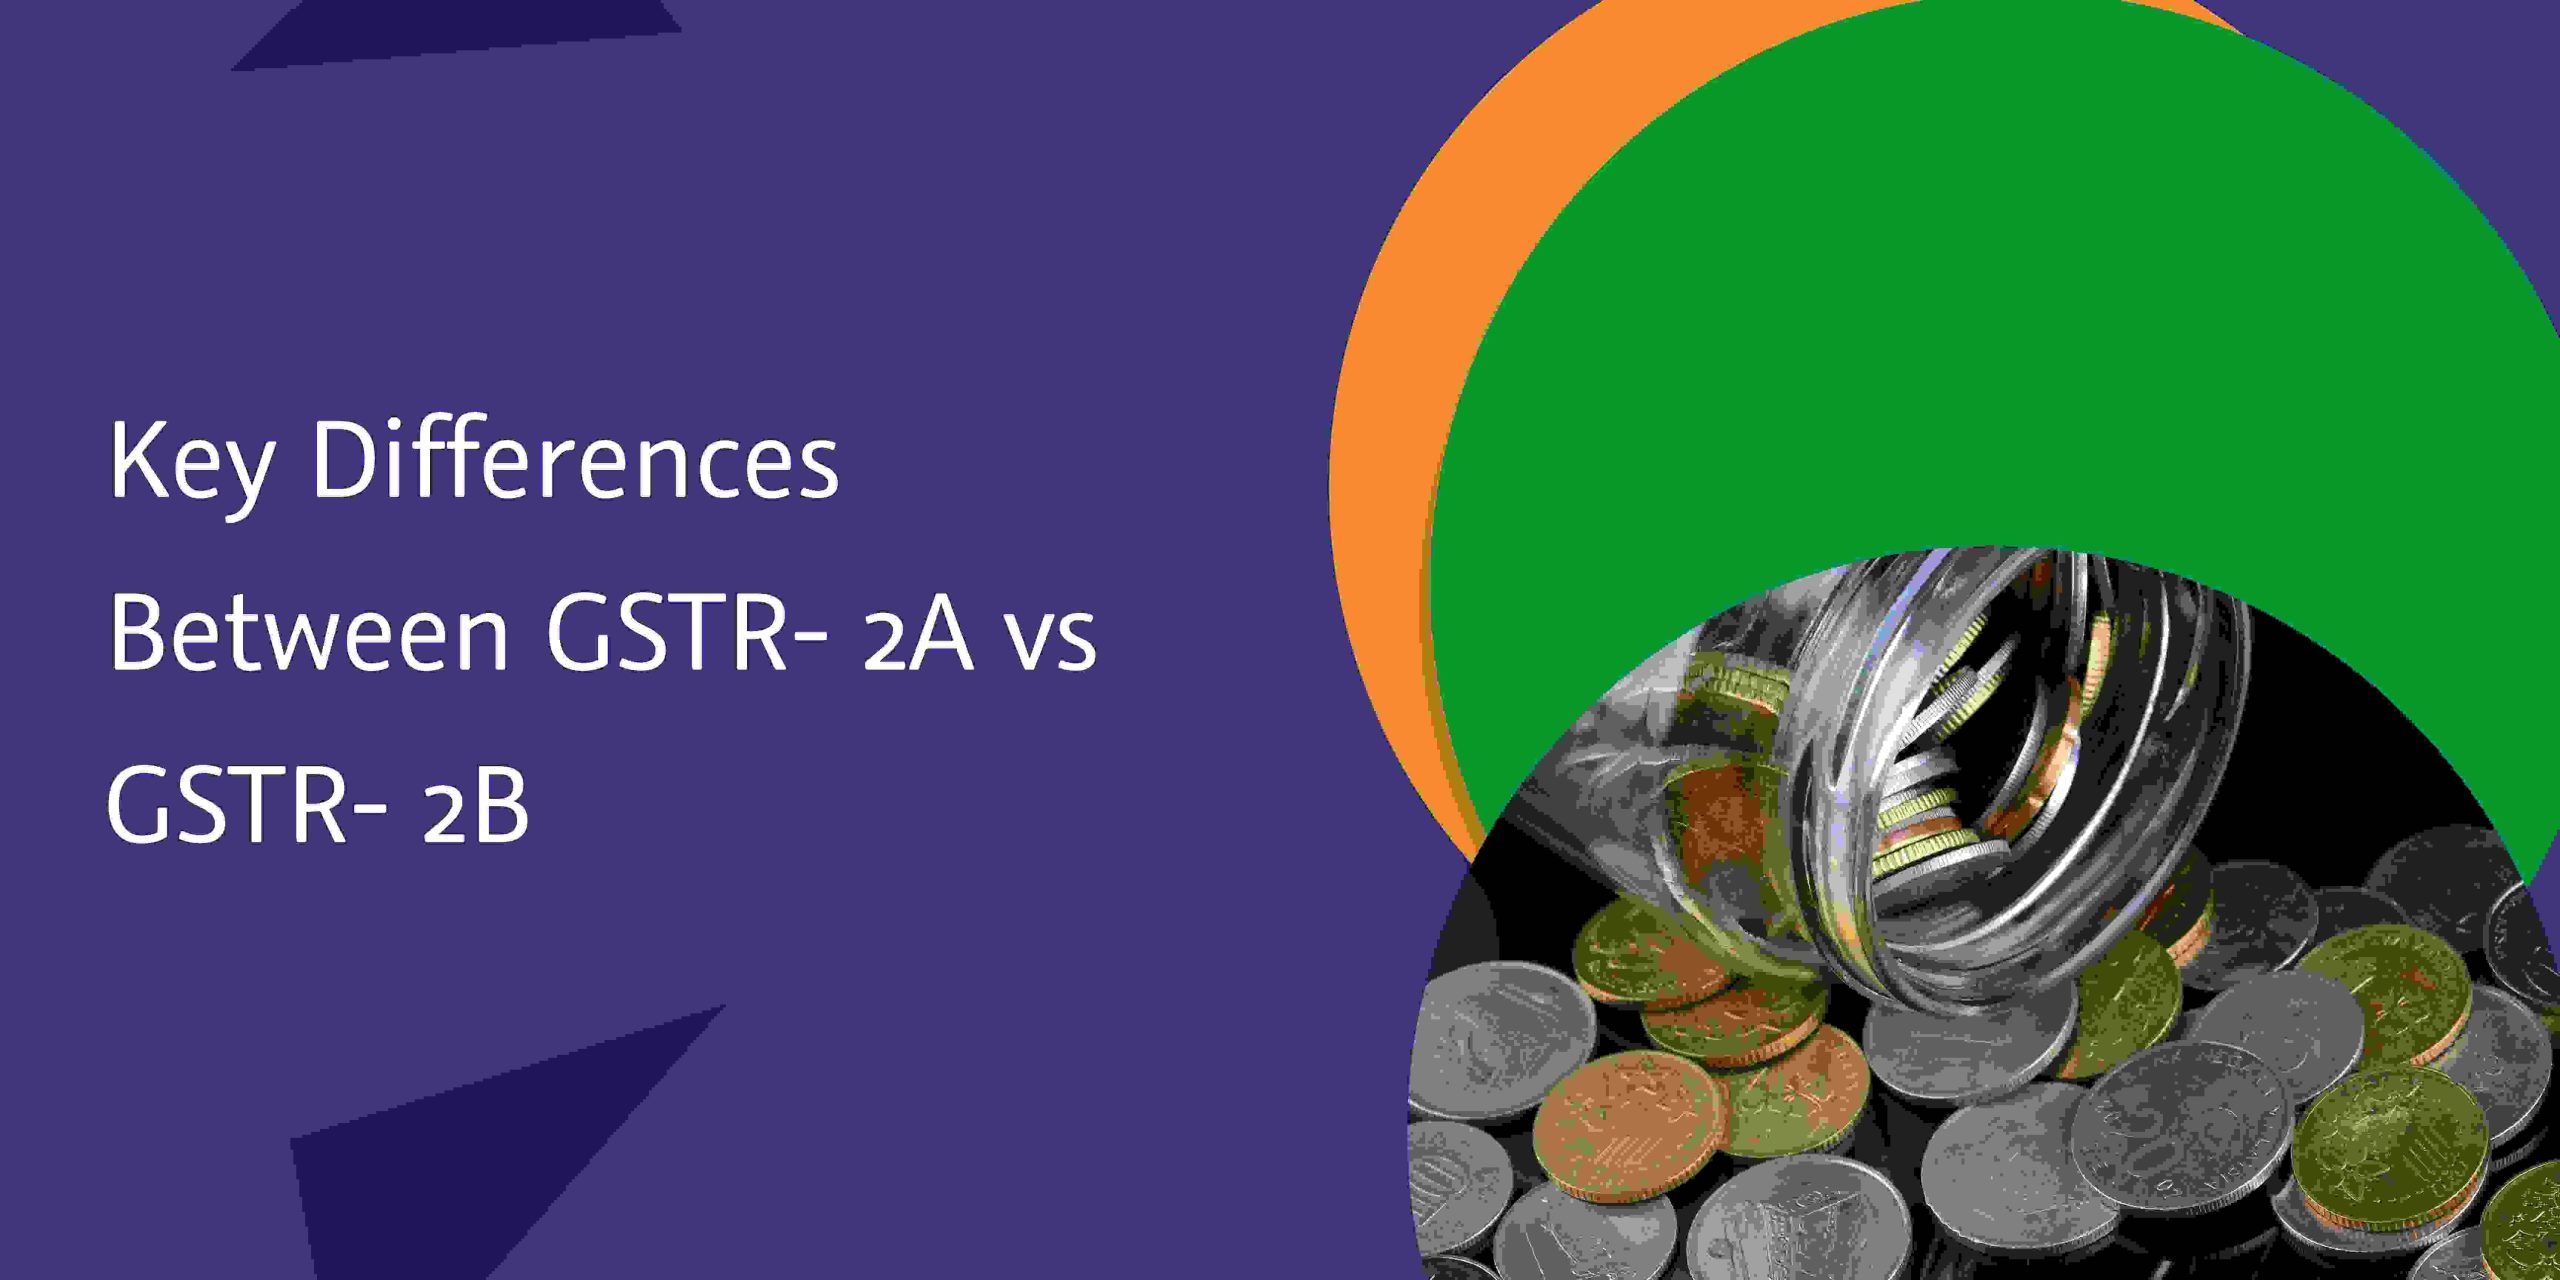 Key Differences Between GSTR- 2A vs GSTR- 2B